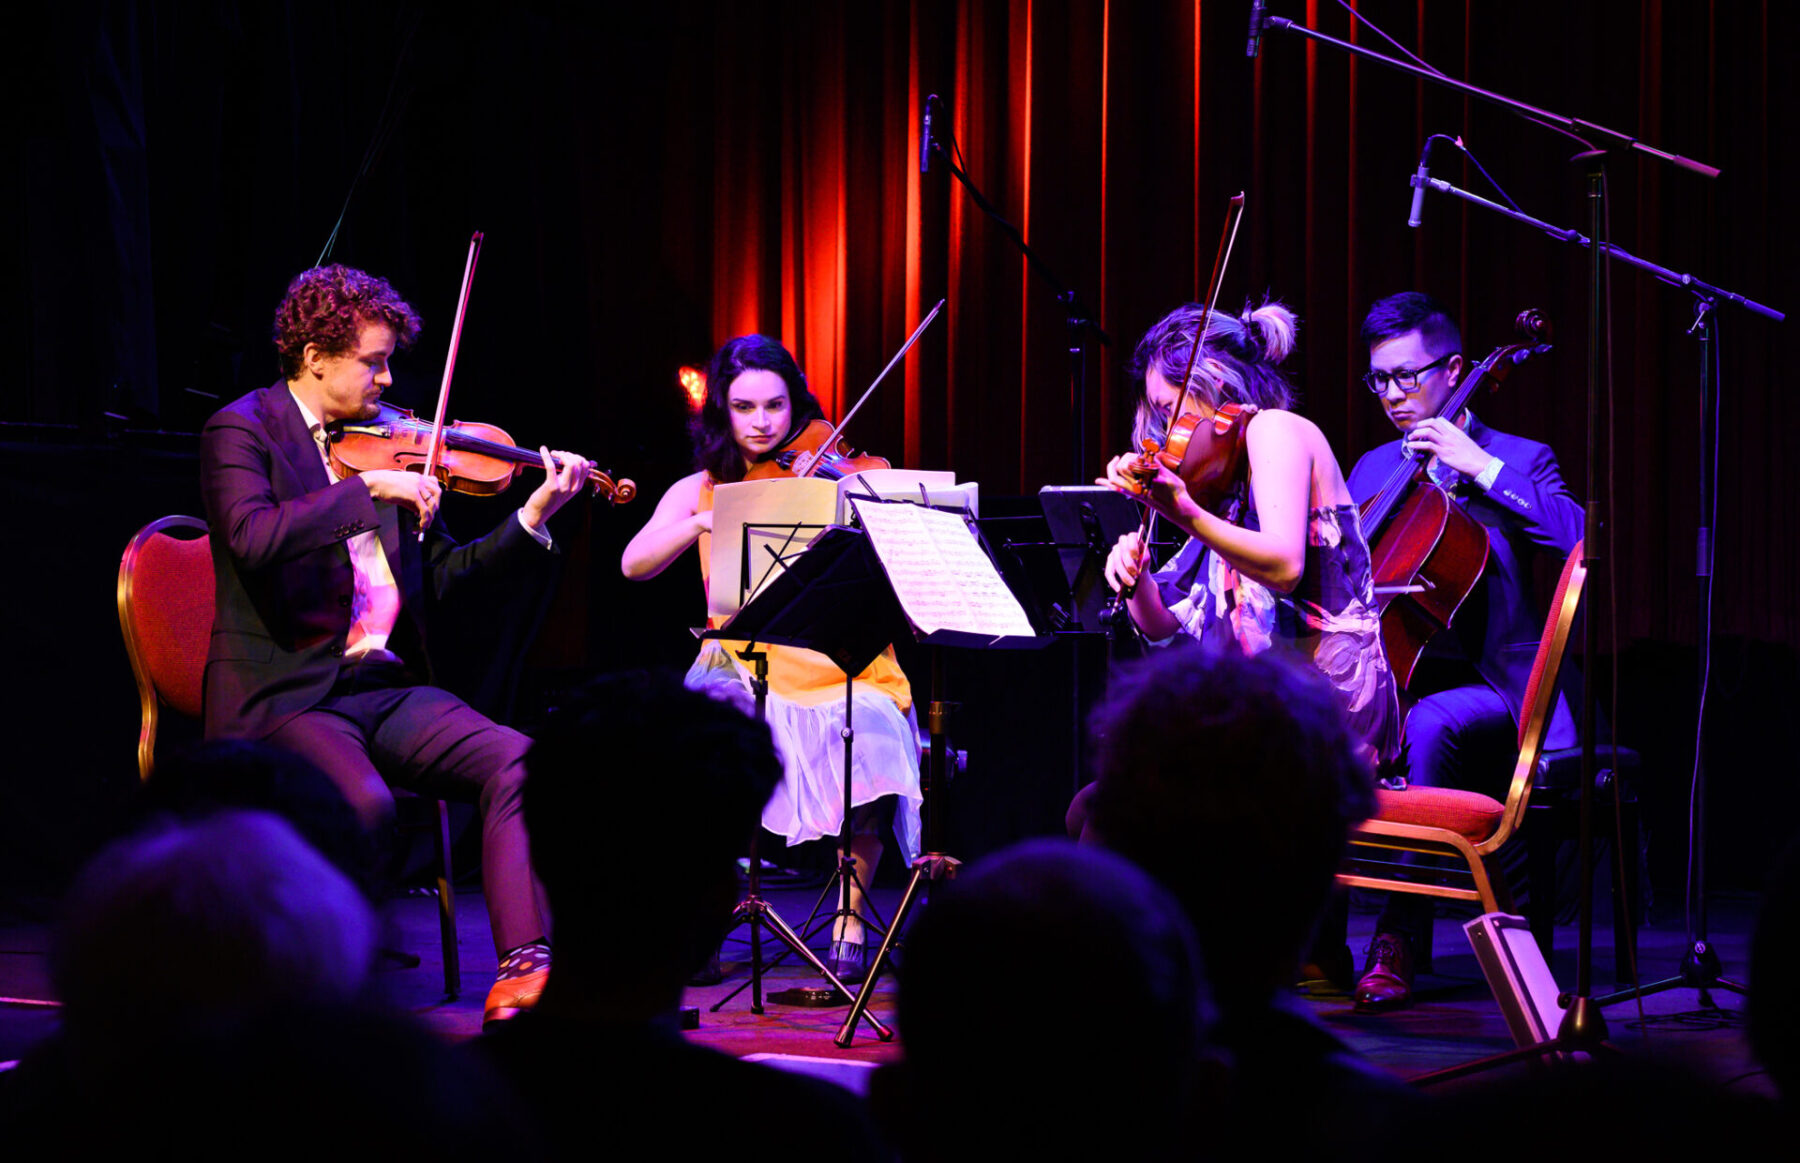 Capilano String Quartet premiere performance at the Fox Cabaret, bathed in purple light